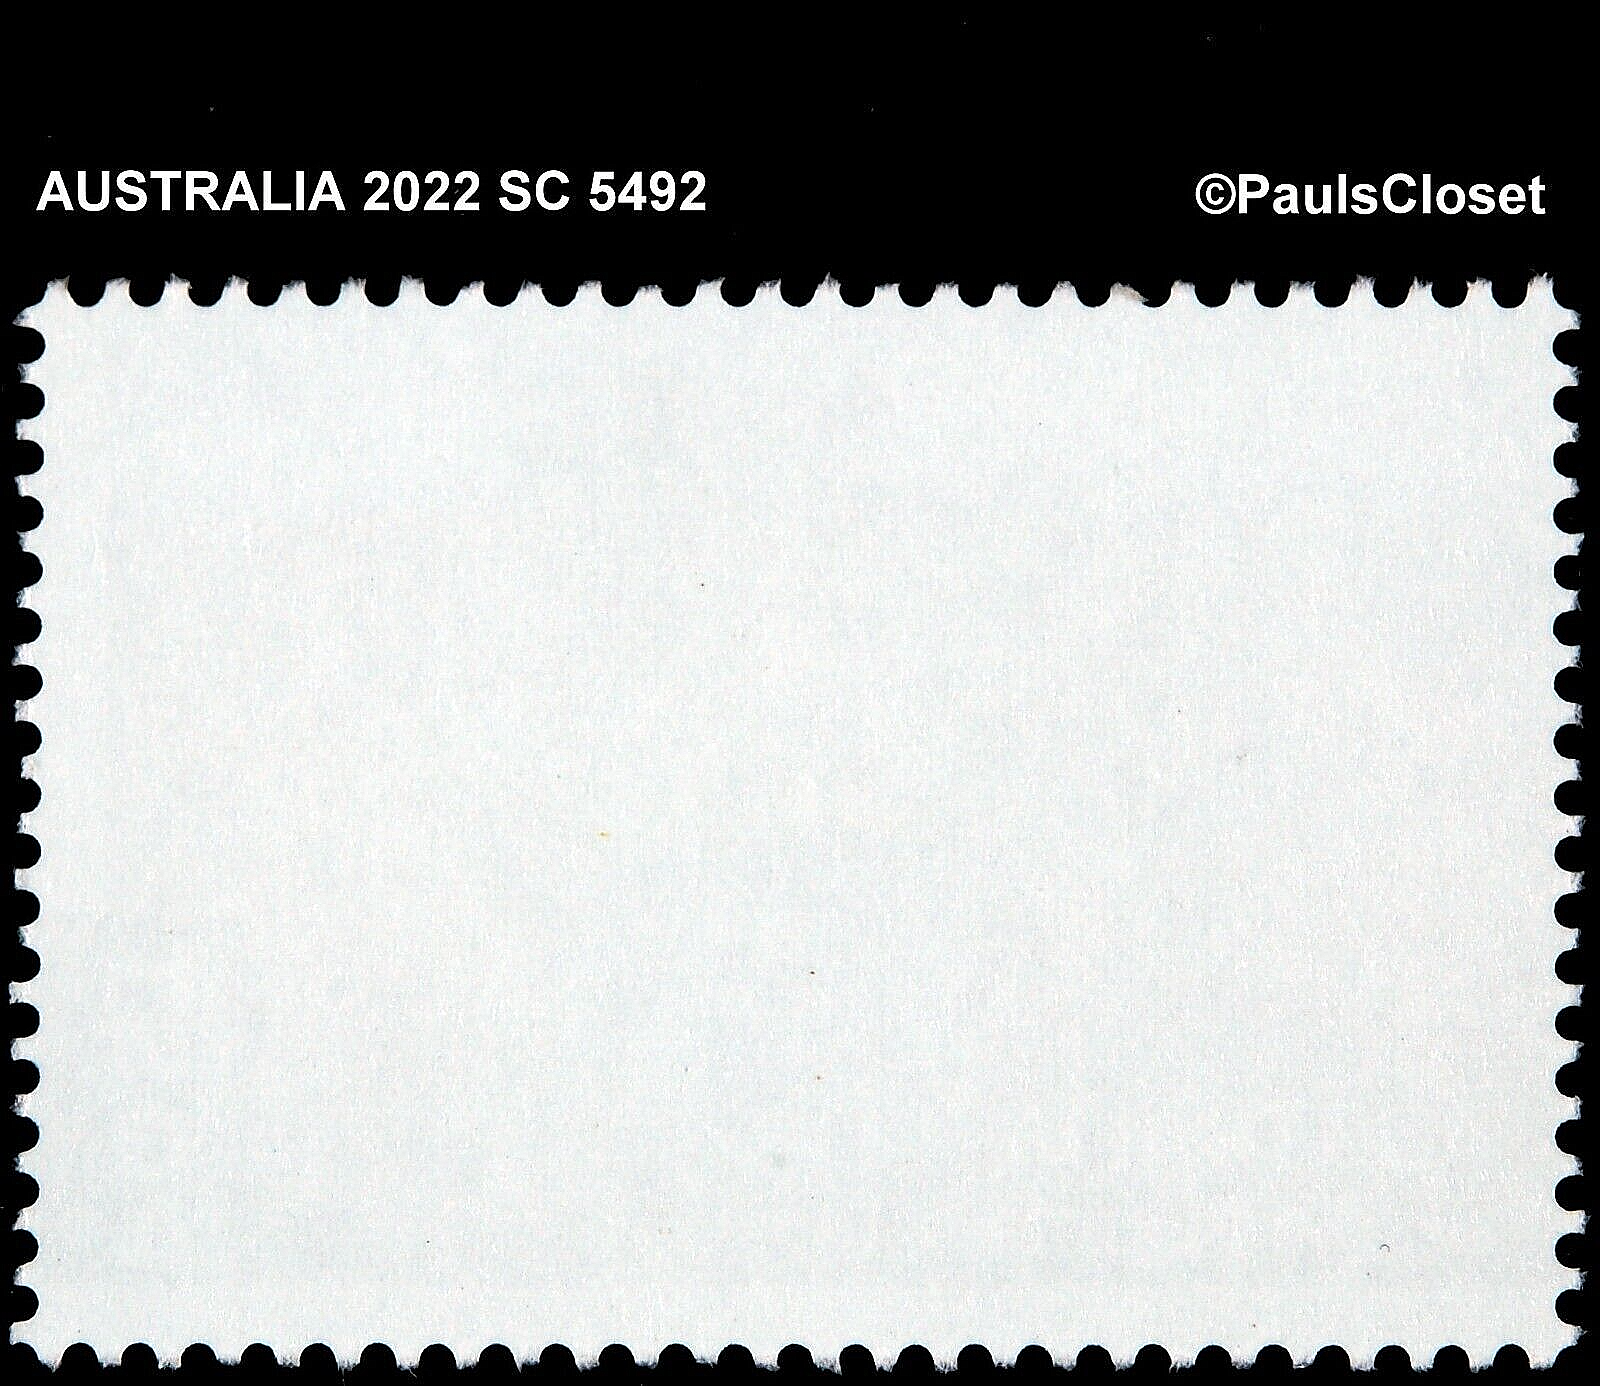 AUSTRALIA 2022 SC 5492-95 AERIAL VIEWS $2.90, $3.50, $3.70 & $4.00 MNH OG VFINE Без бренда - фотография #3